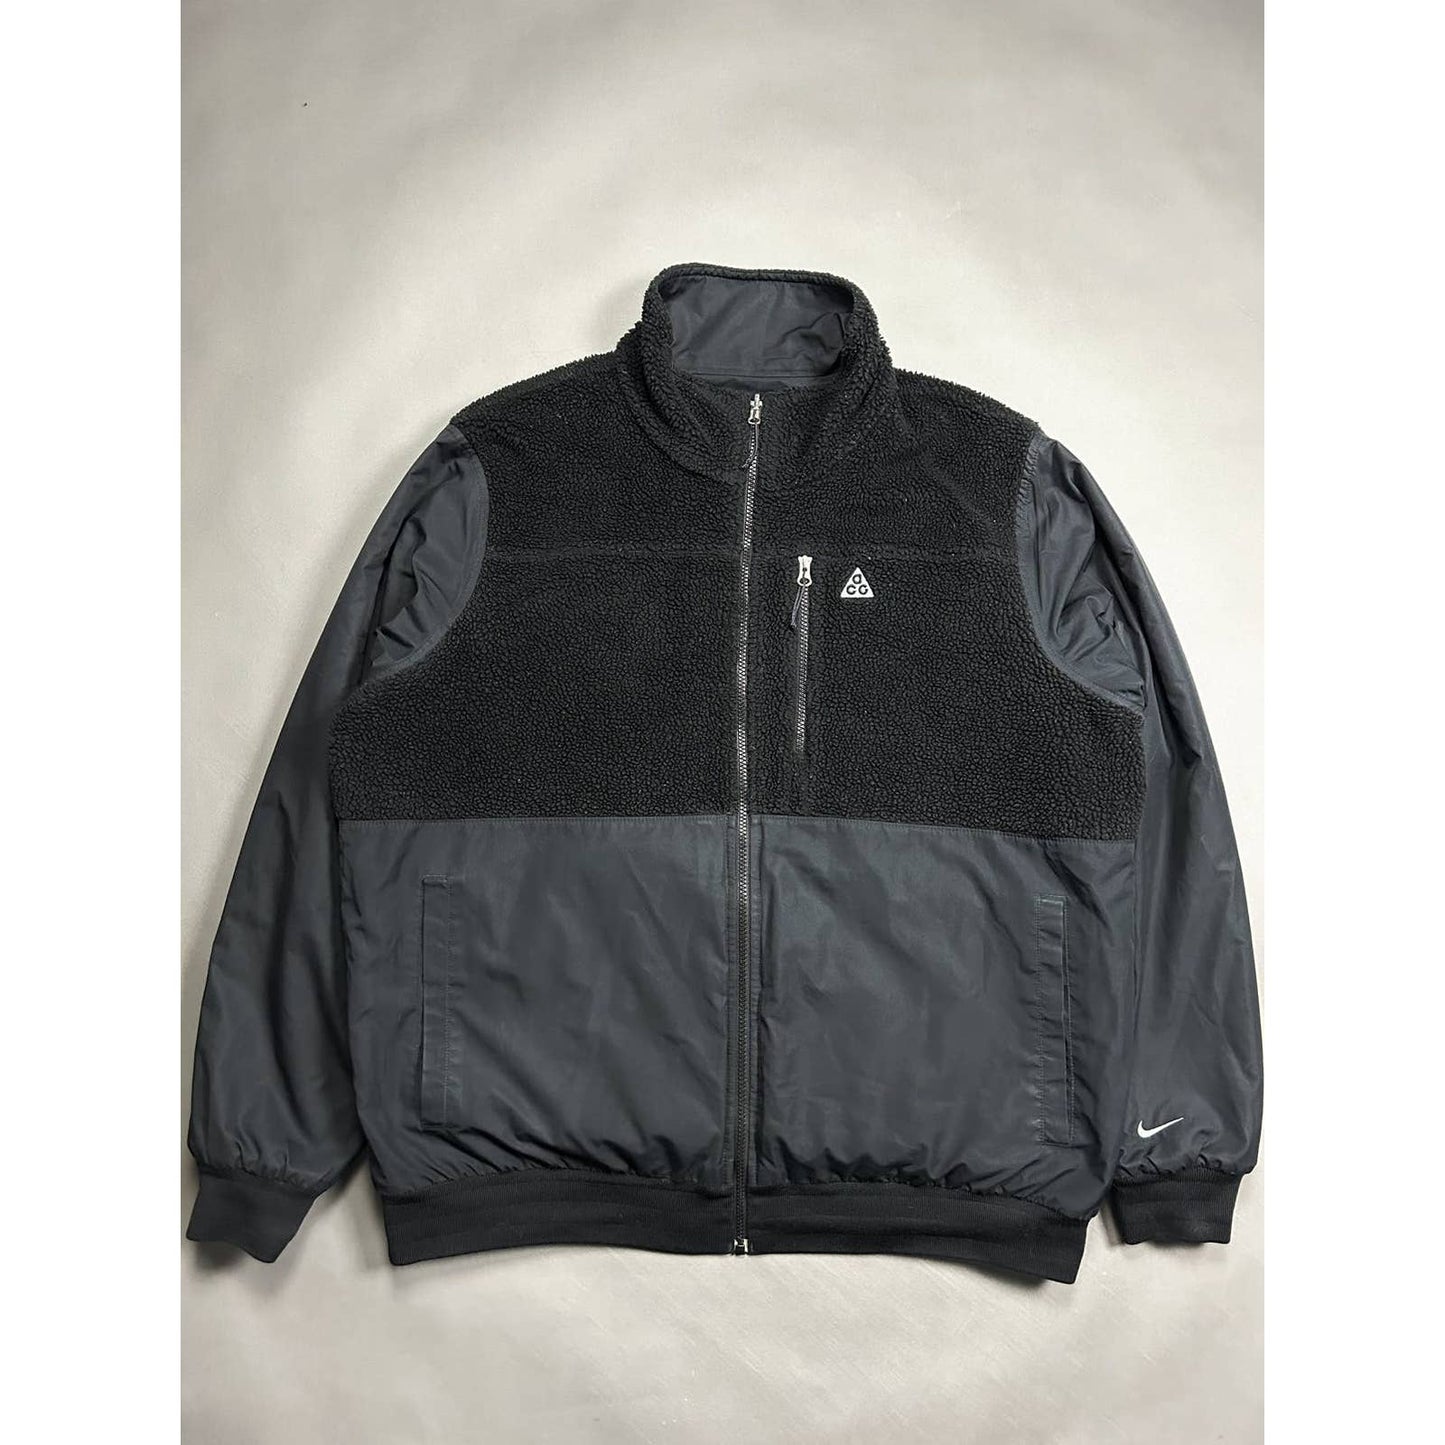 Nike ACG fleece jacket reversible black sherpa vintage